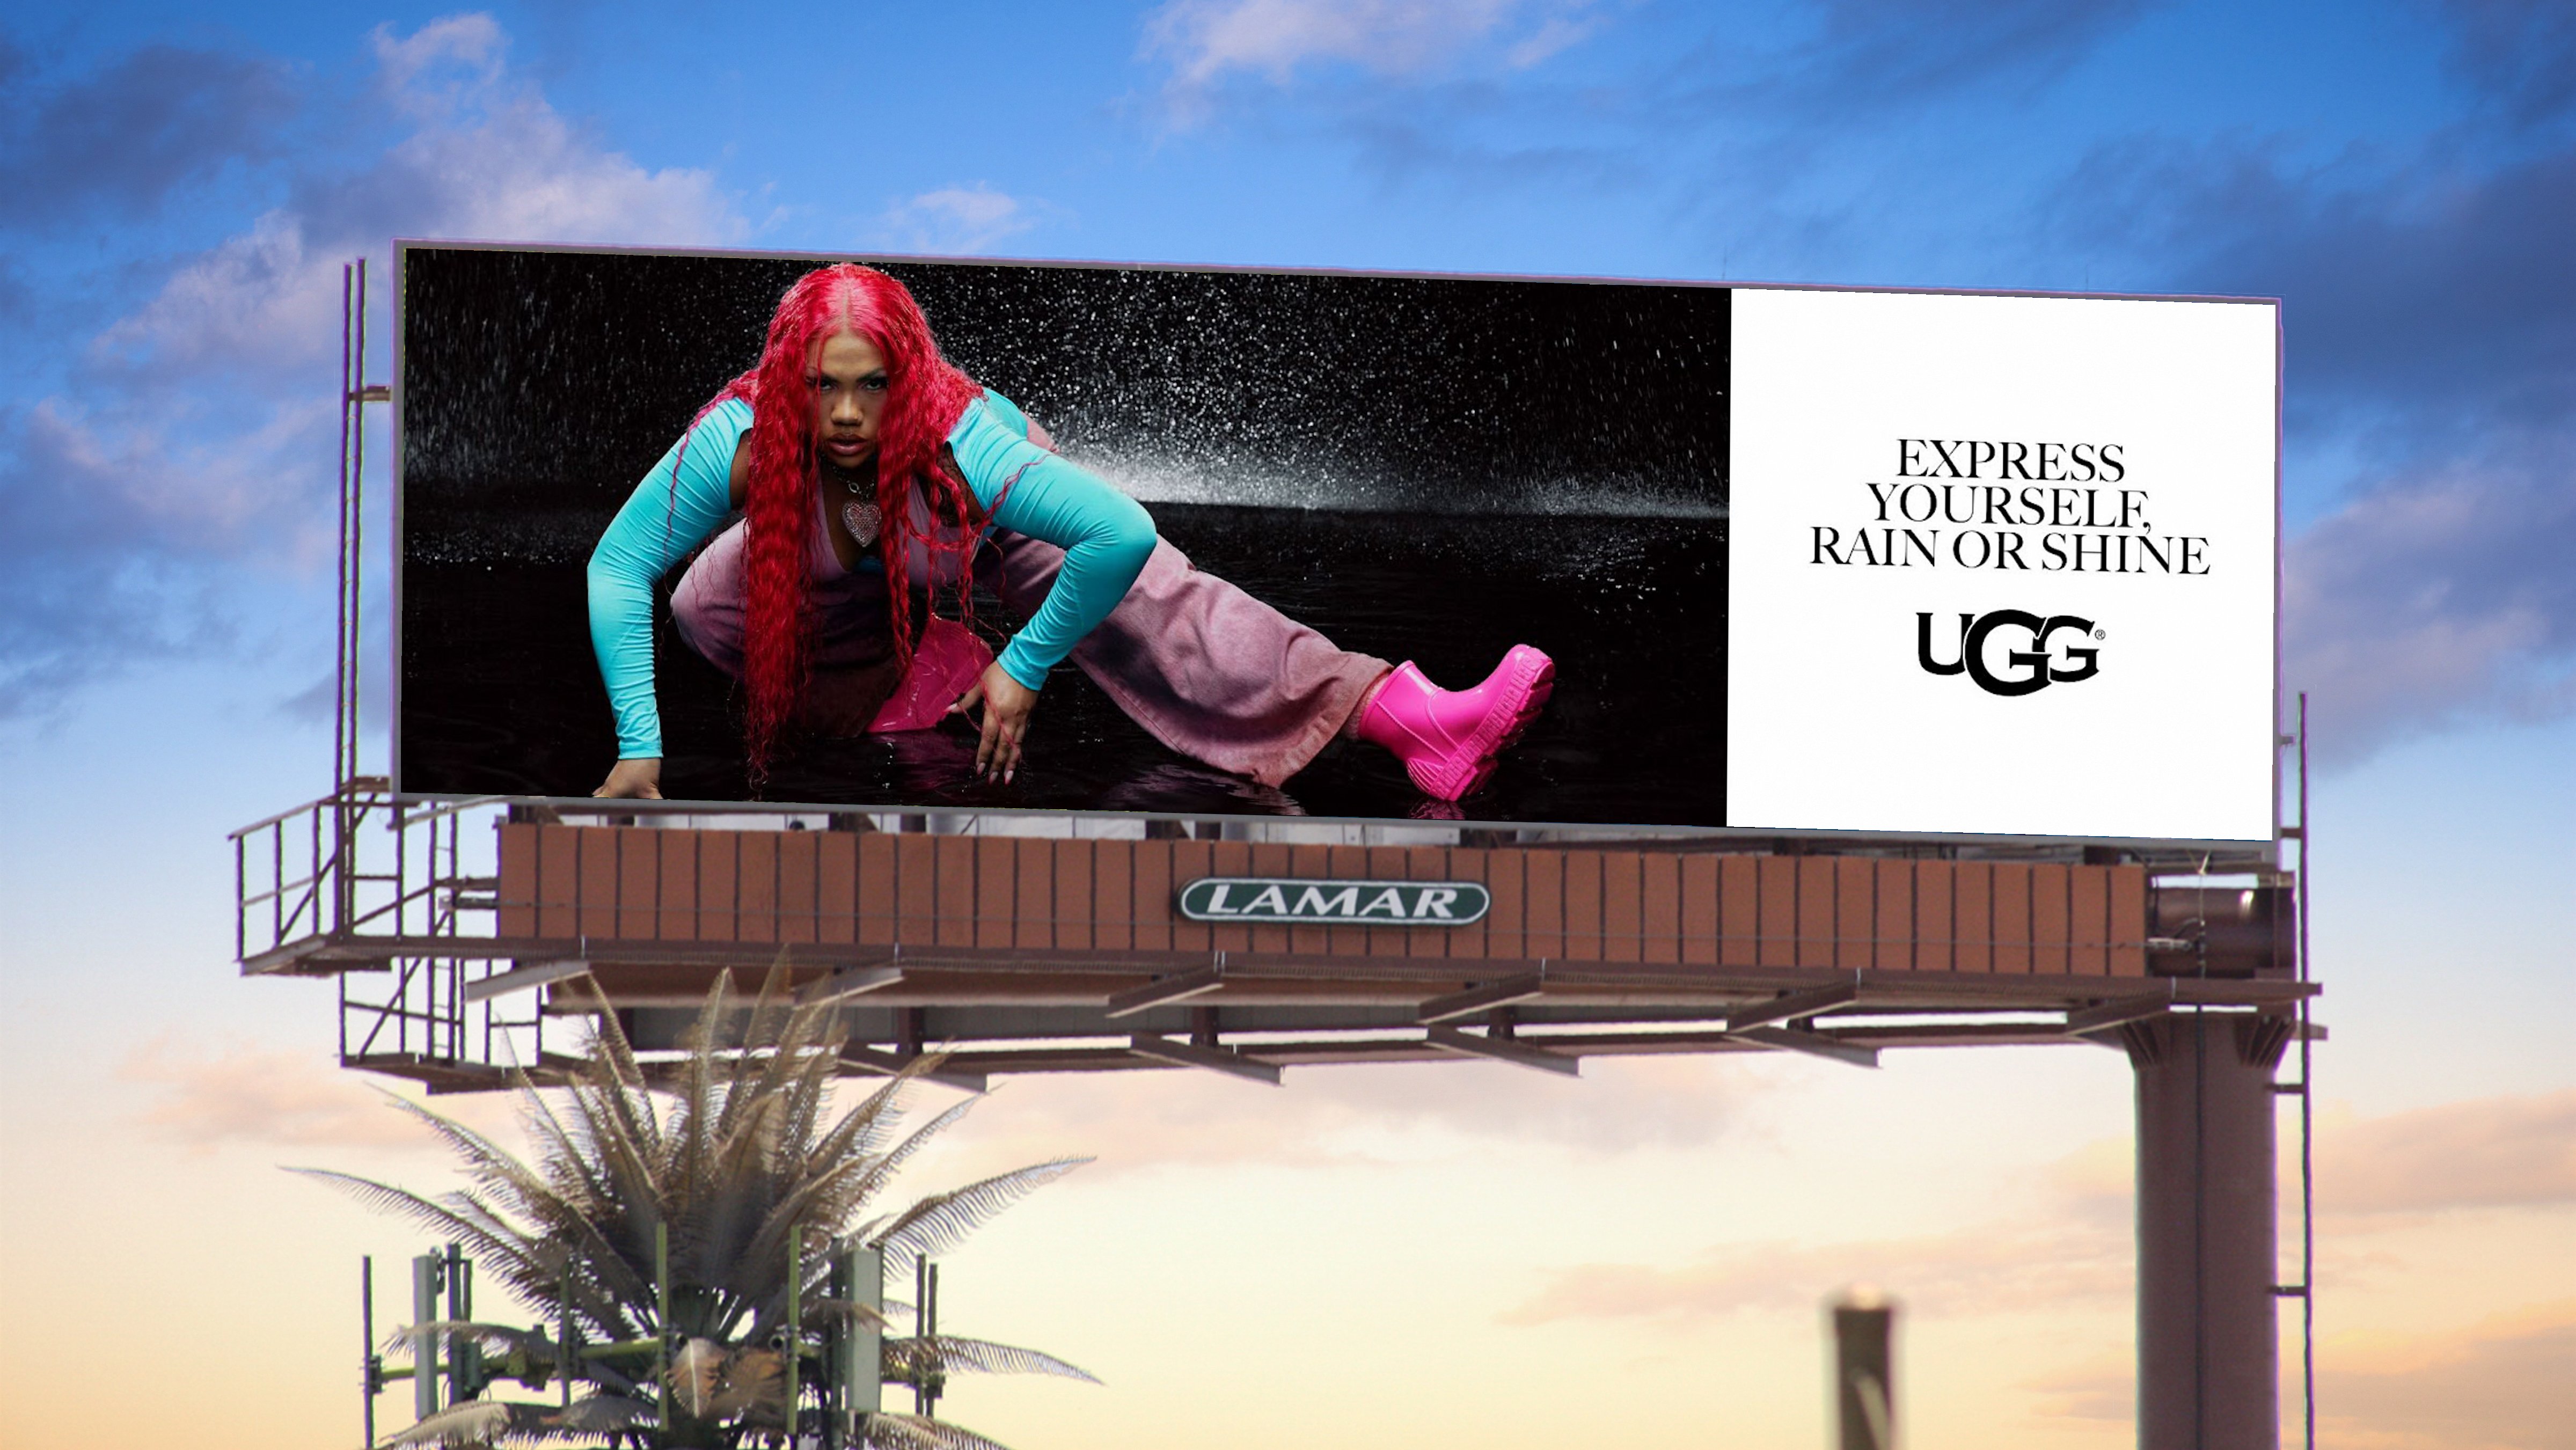 UGG programmatic DOOH advertisement on a highway billboard